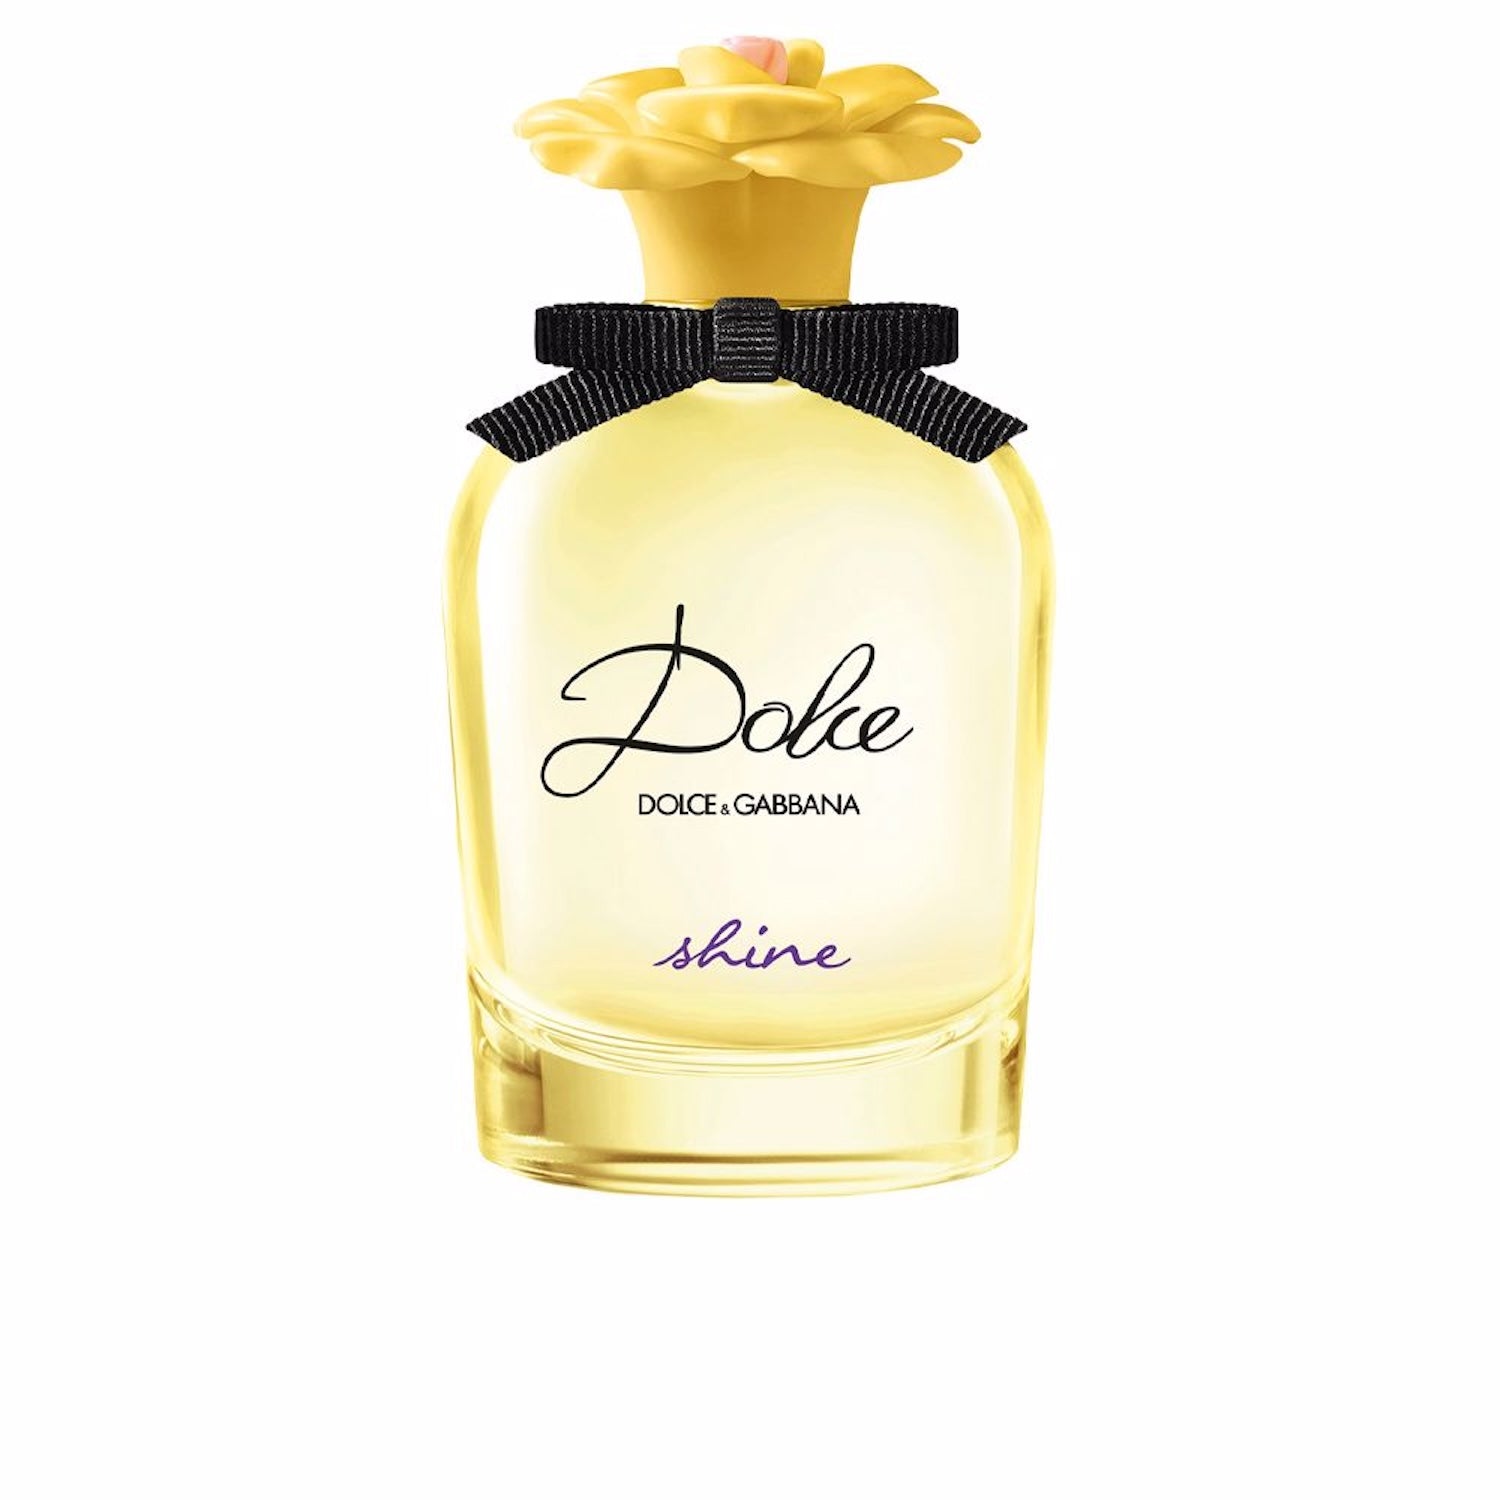 DOLCE & GABBANA SHINE Eau de Parfum Spray